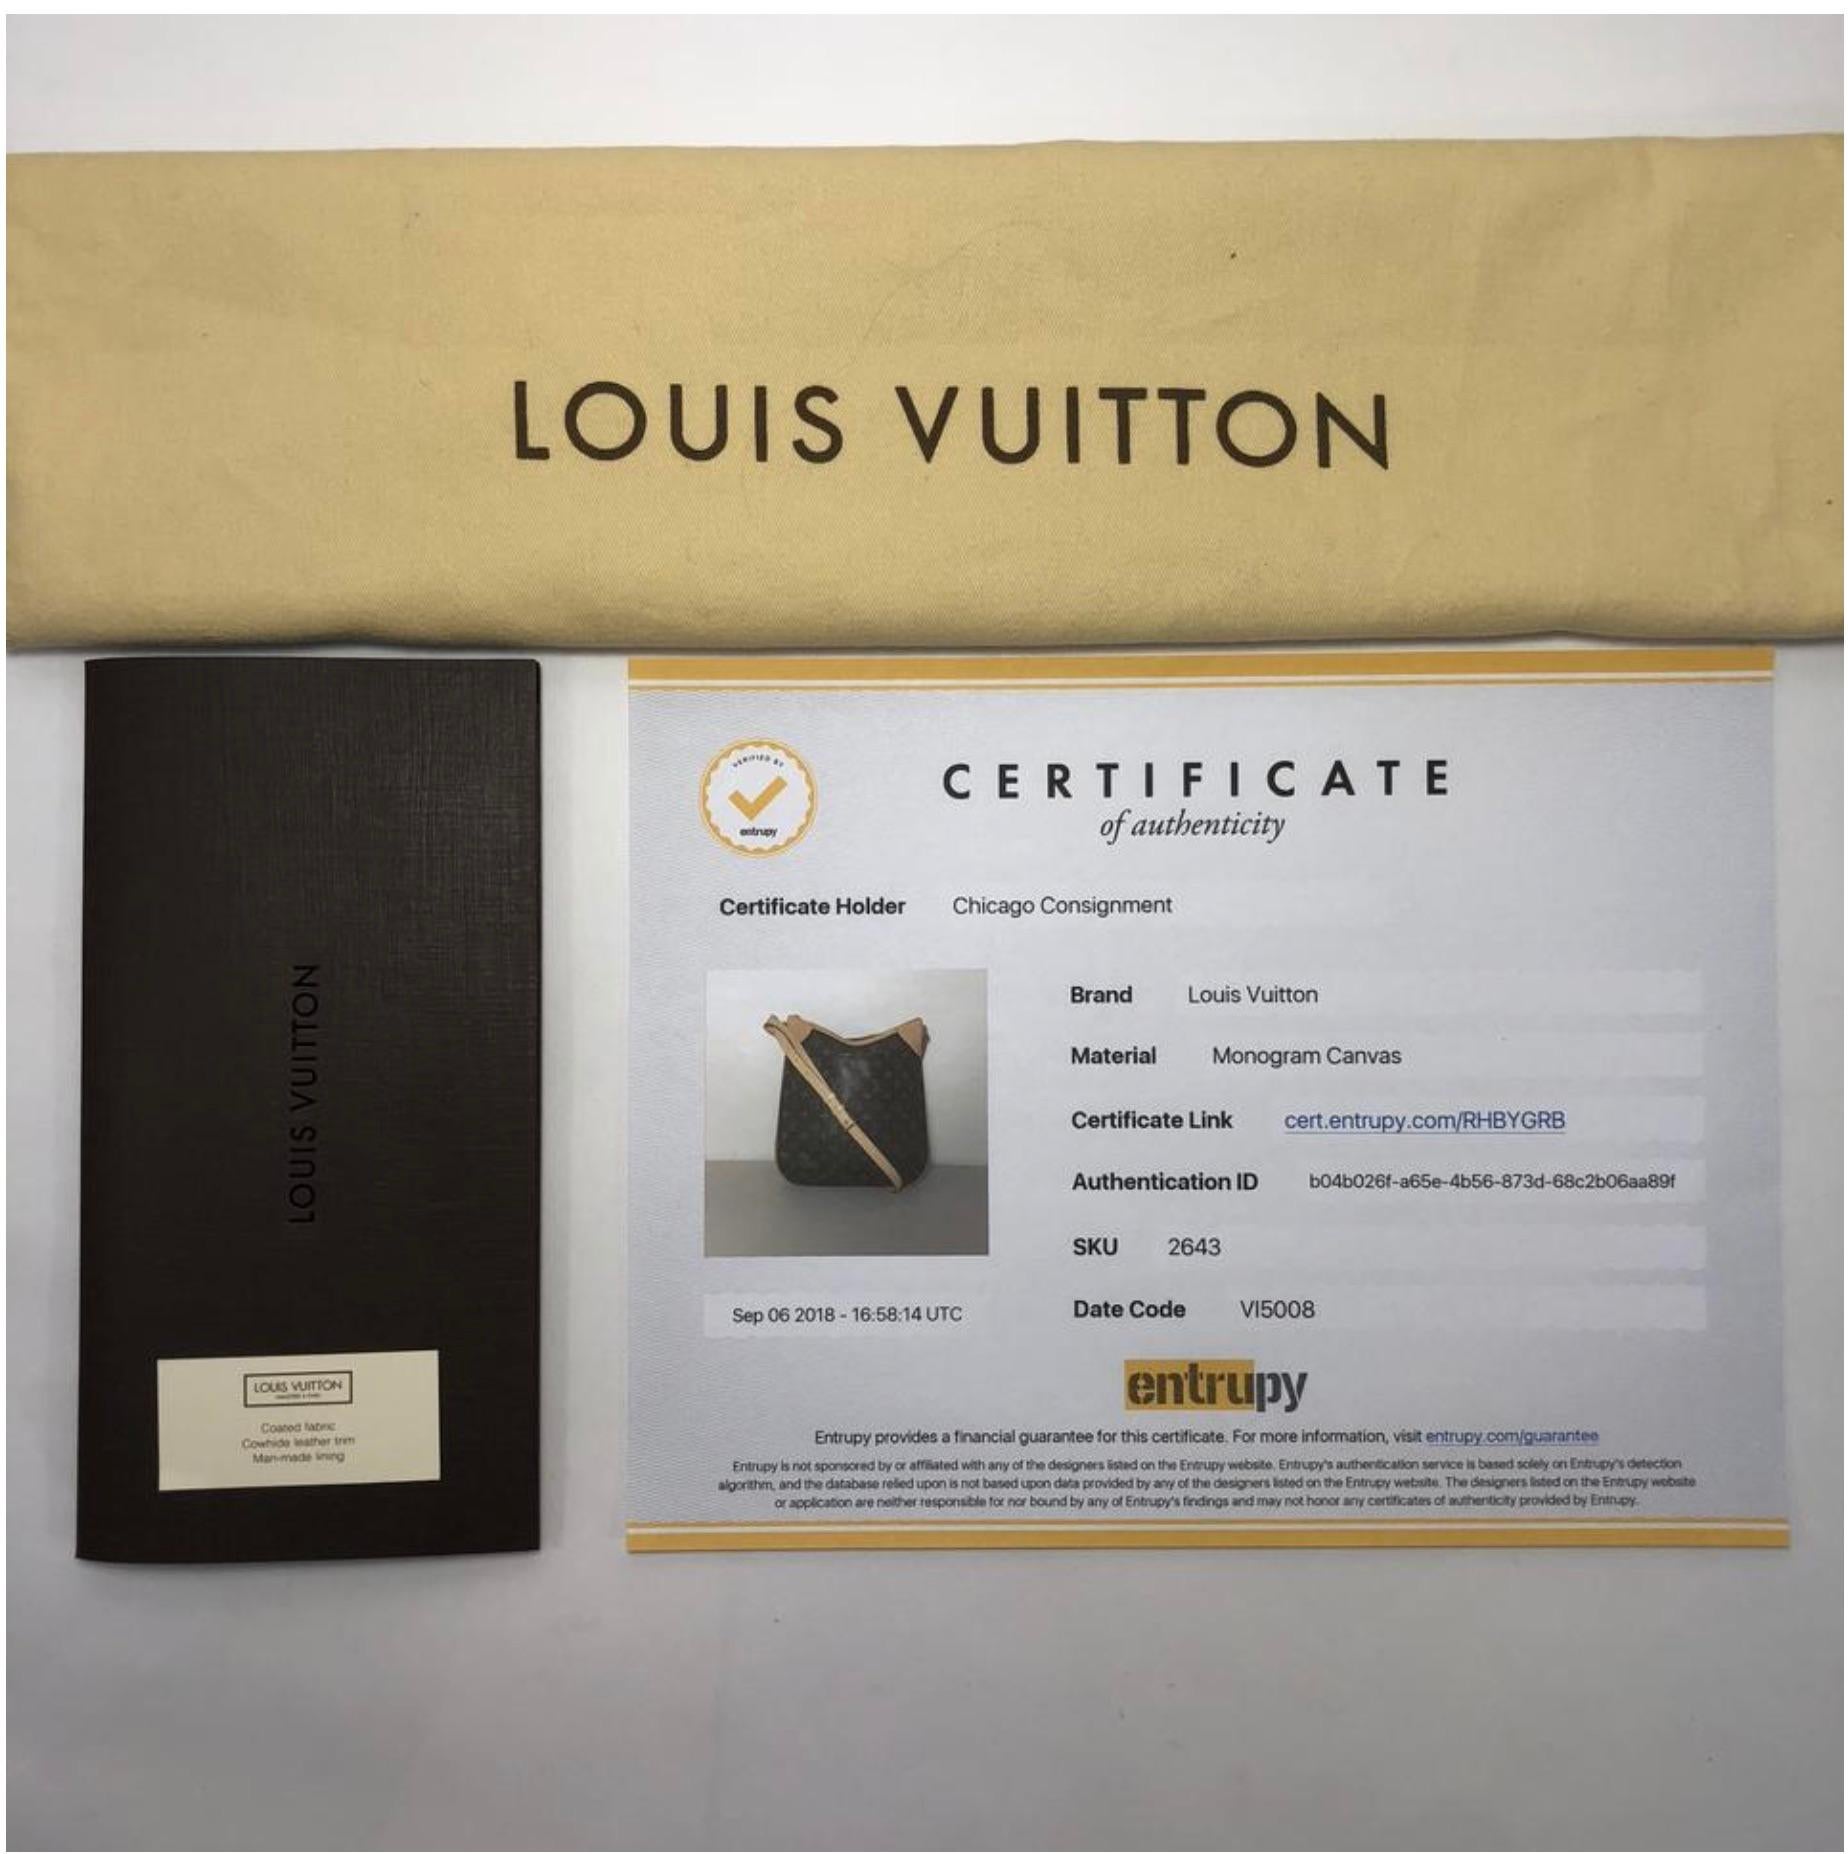 MODEL - Louis Vuitton Monogram Odeon MM Crossbody Handbag

CONDITION - Exceptional! No visibile signs of wear.

SKU - 2643

DATE/SERIAL CODE - VI5008

ORIGIN - France

PRODUCTION - 2008

DIMENSIONS - L12.6 x H13.4 x D2

STRAP/HANDLE DROP - 20.5 to